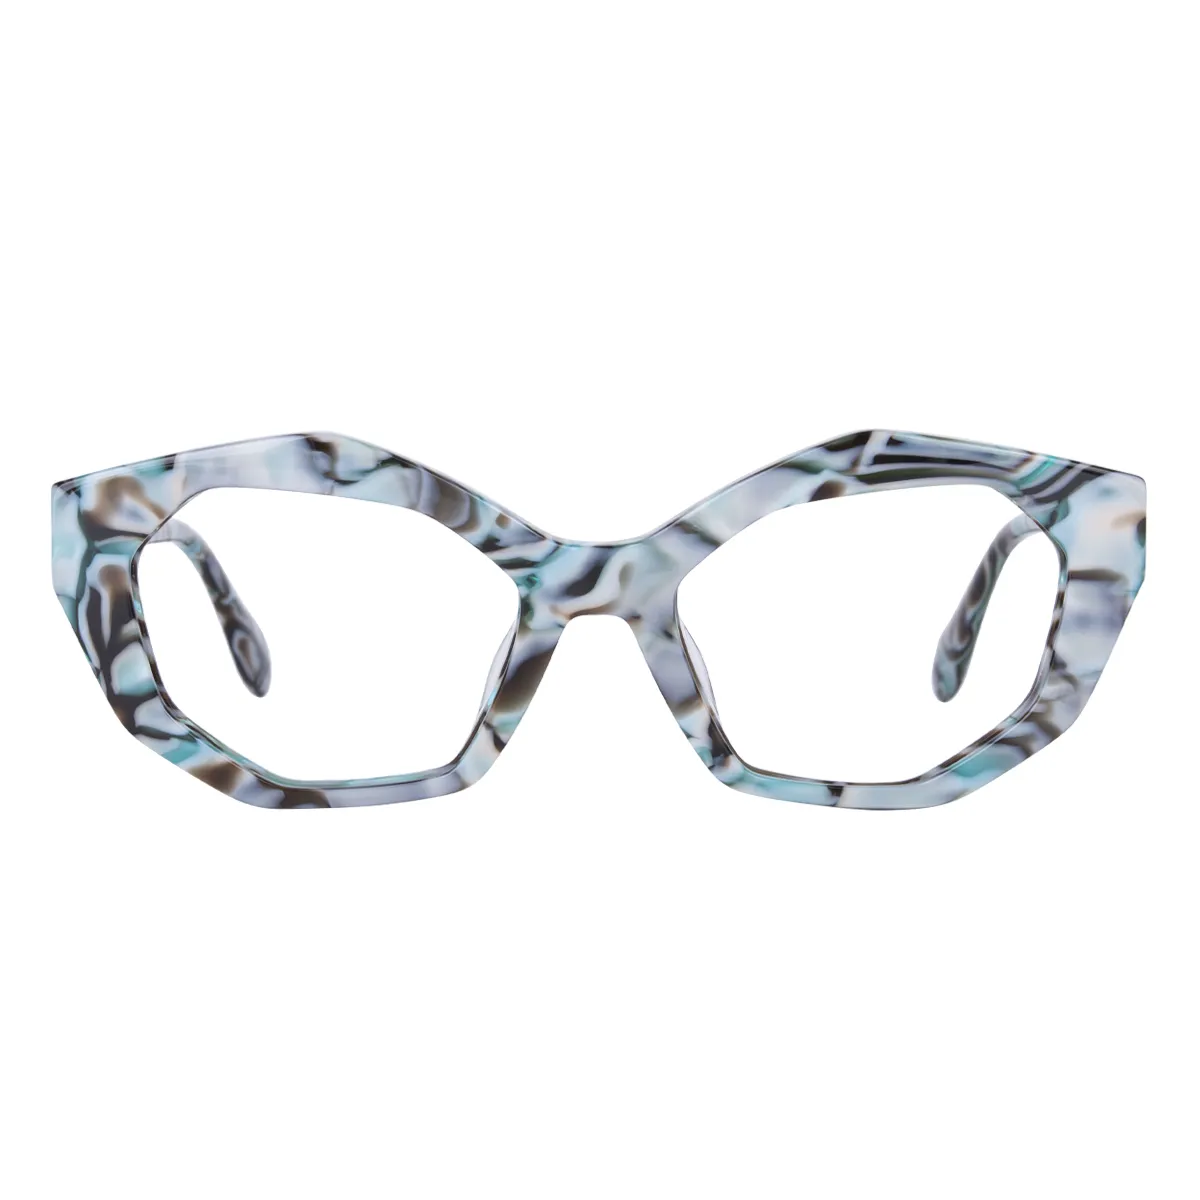 Betina - Geometric Blue Glasses for Women